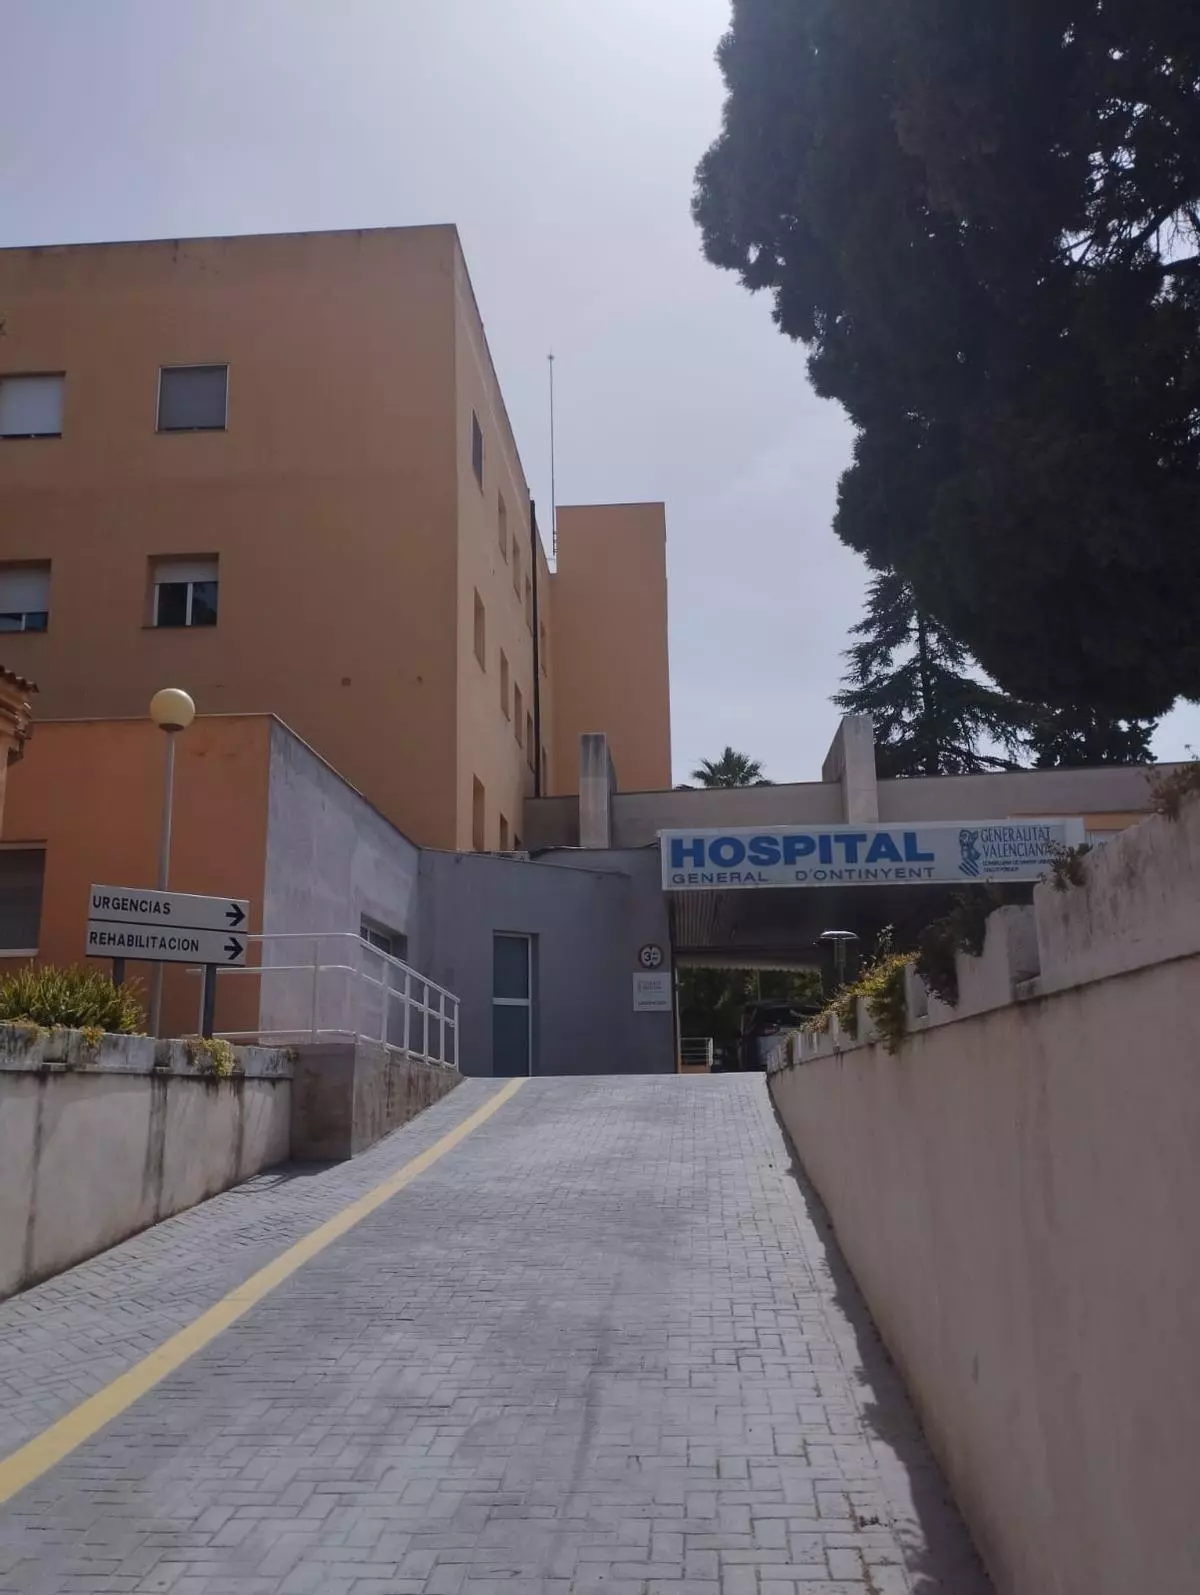 El PSPV califica de "escándalo" el cierre de maternidad del hospital de Ontinyent